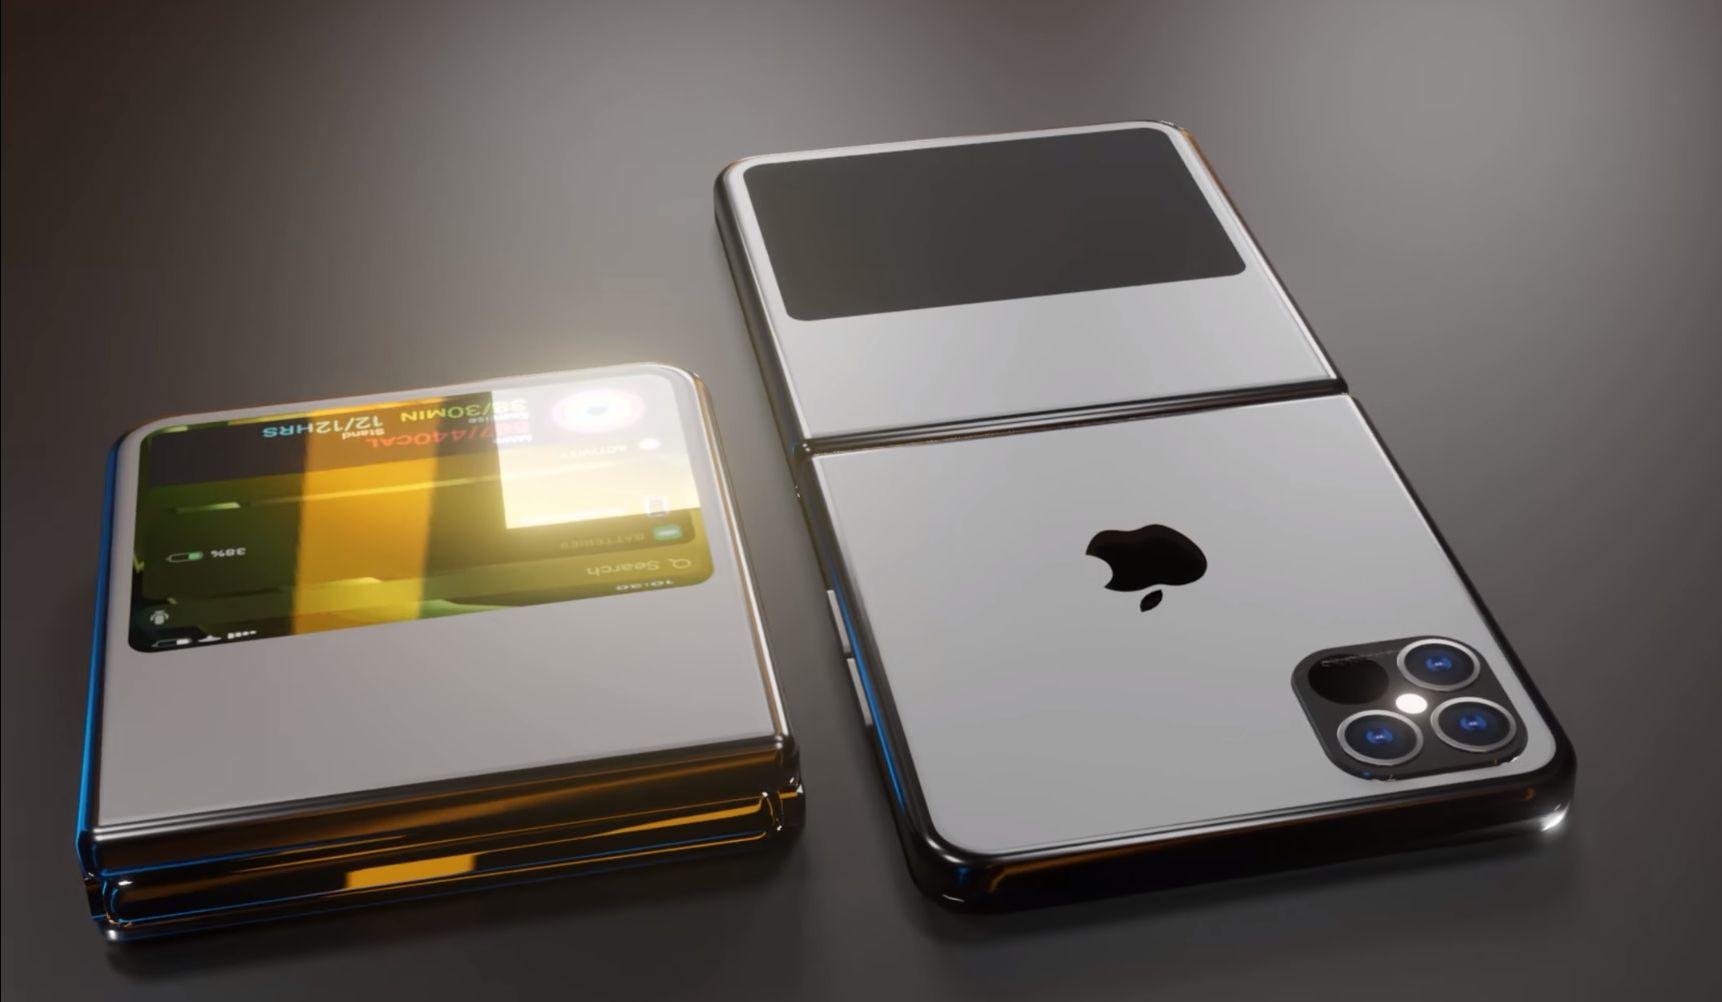 iPhone-Flip-concept-render-foldable-phone-2.jpg